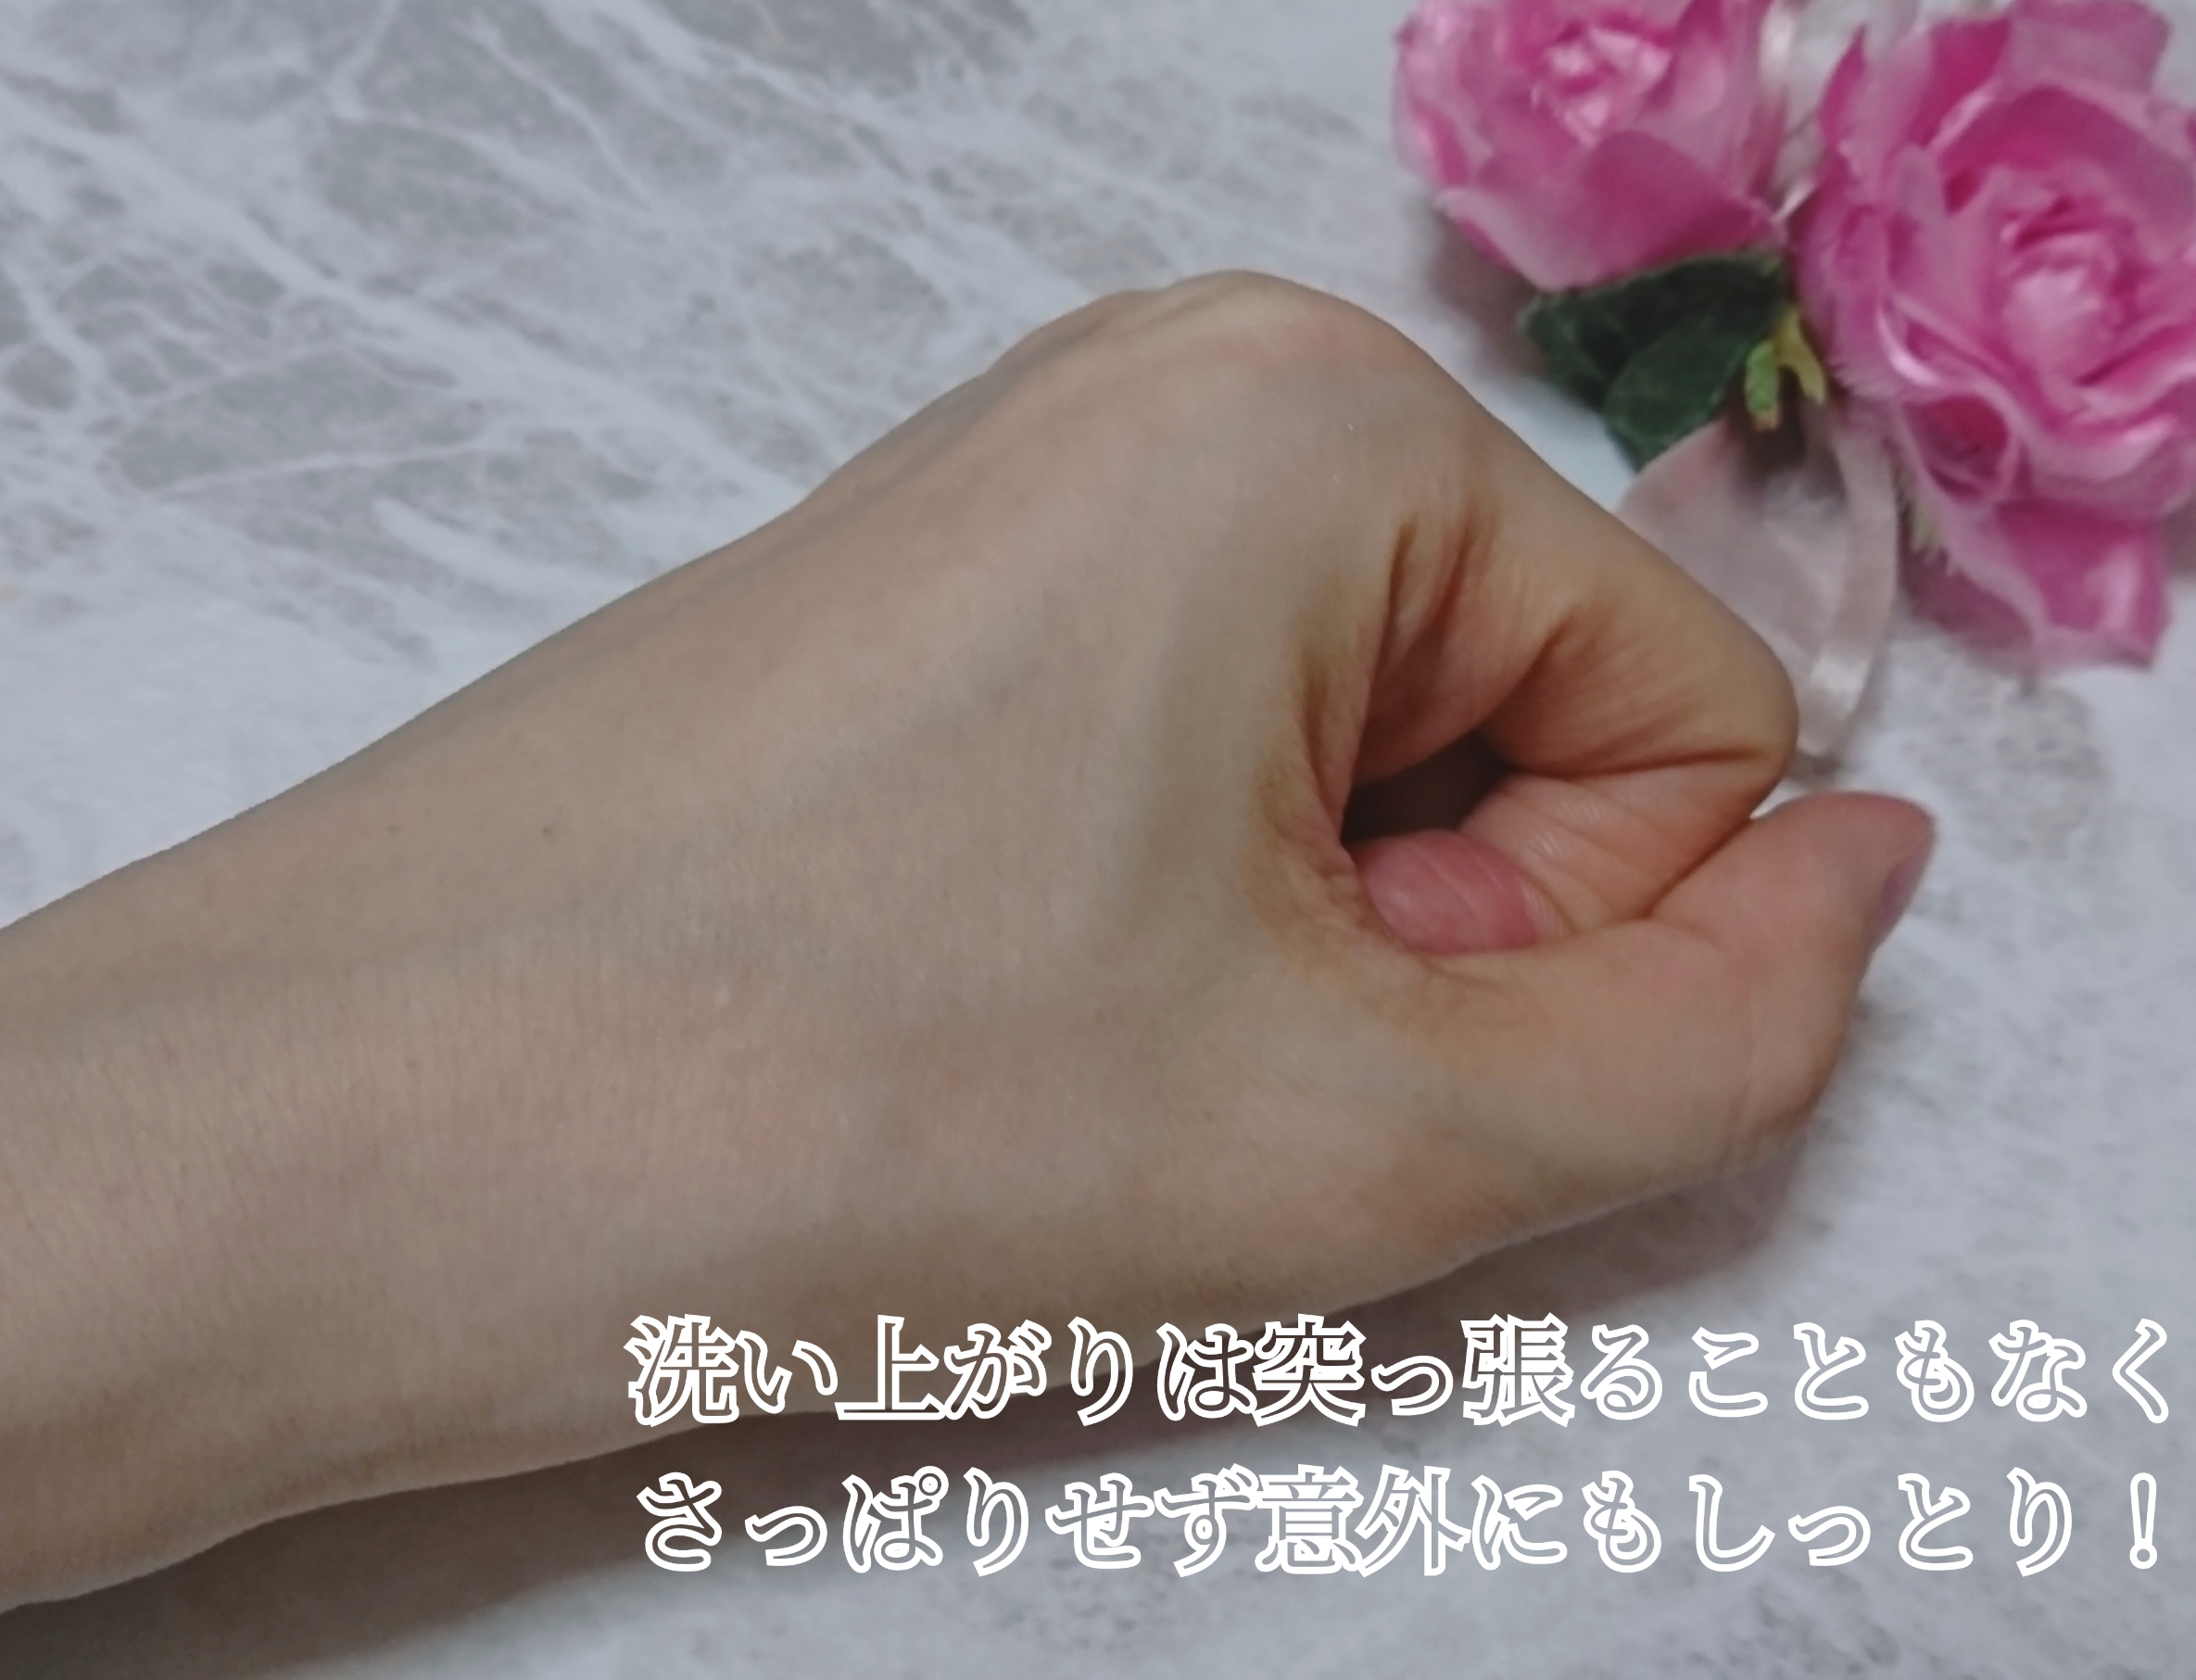 DUO(デュオ) ザ クレンジングバーム ブラックリペアを使ったYuKaRi♡さんのクチコミ画像7